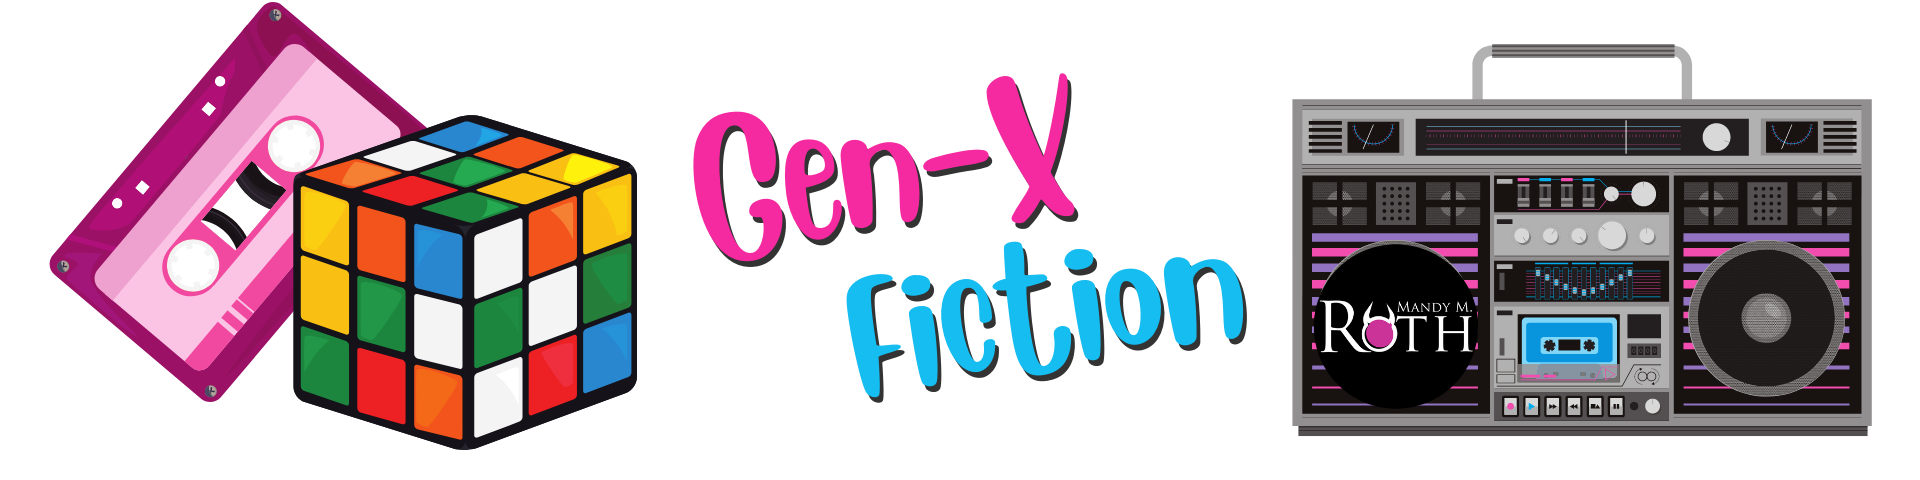 Gen-X-Fiction